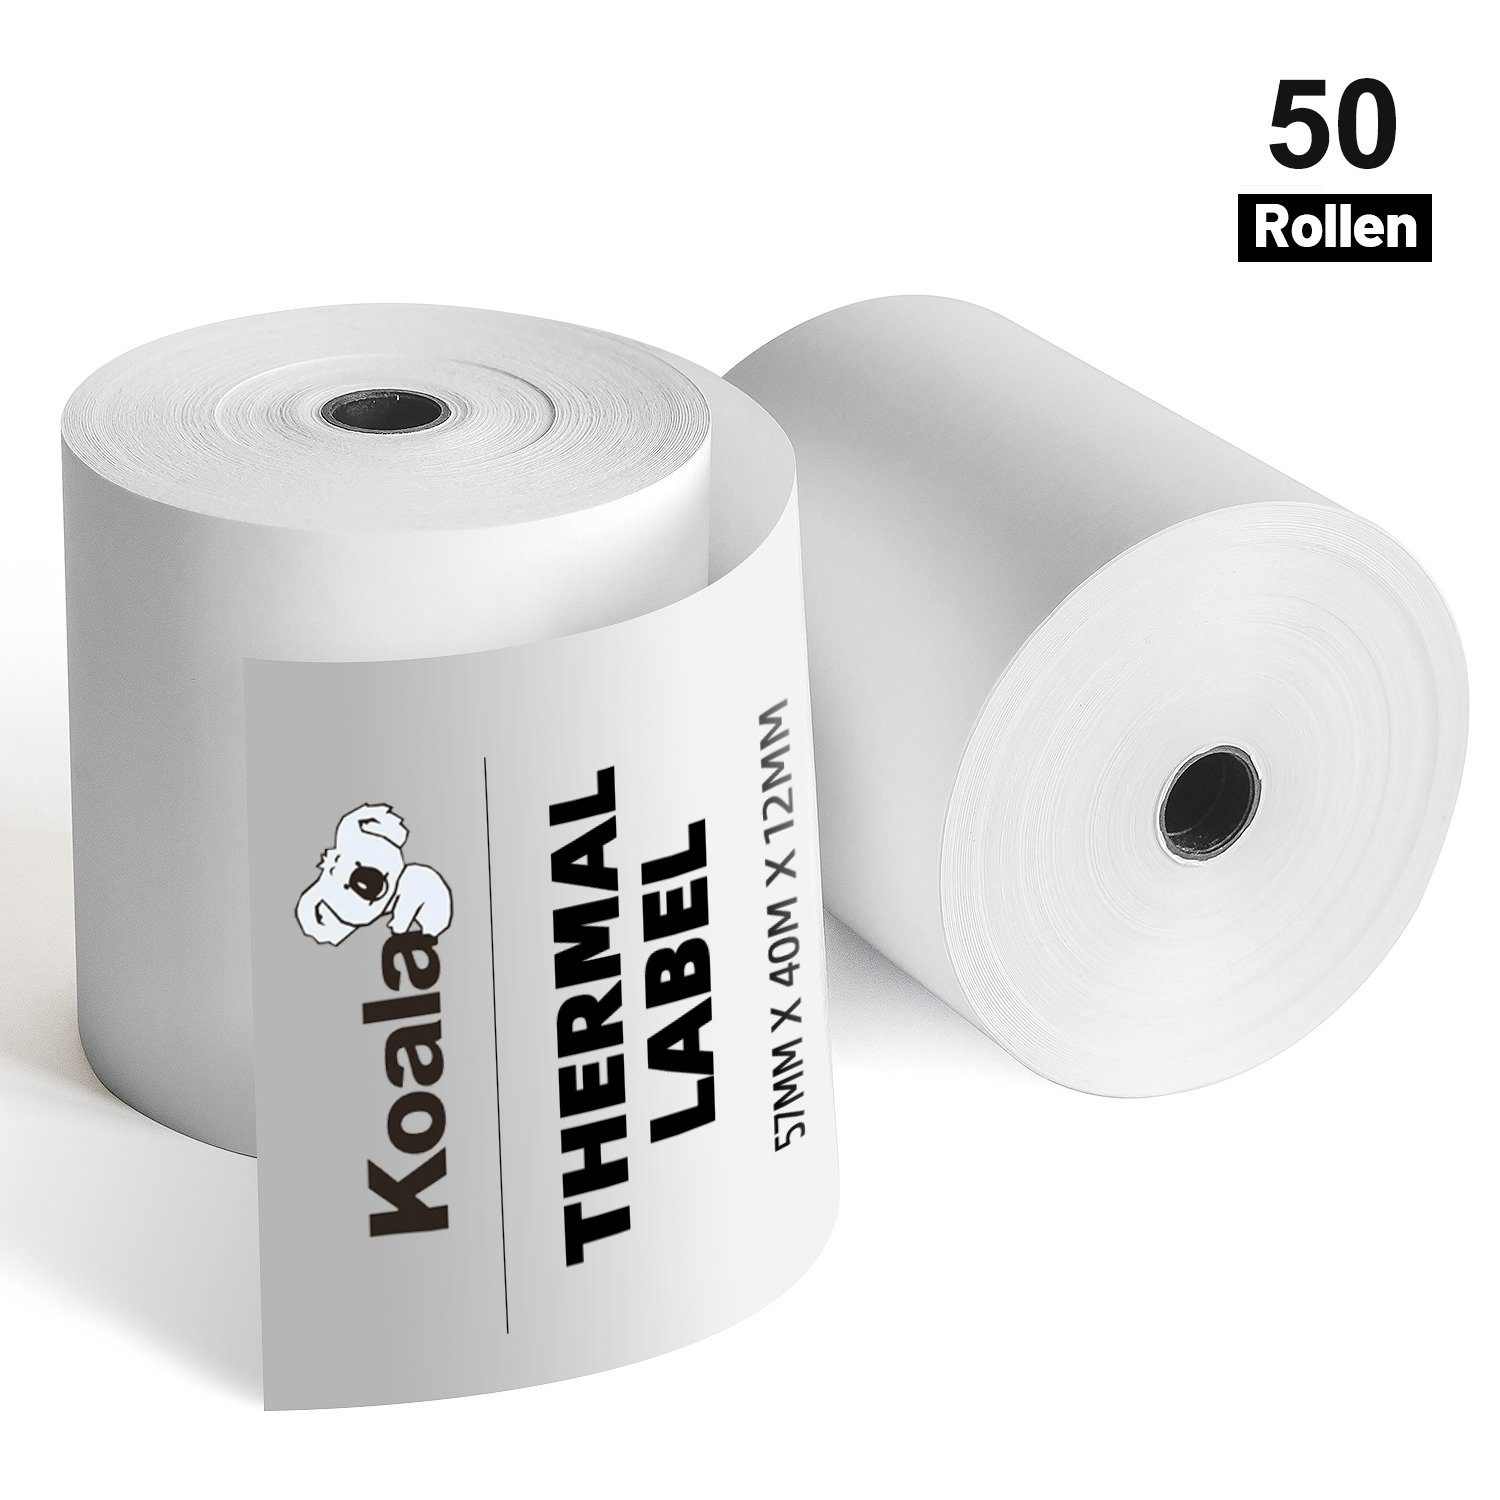 Koala Etikettenpapier 50 Rollen 57 Thermopapier 40 mm für x Drucker Kassen, Bonrolle